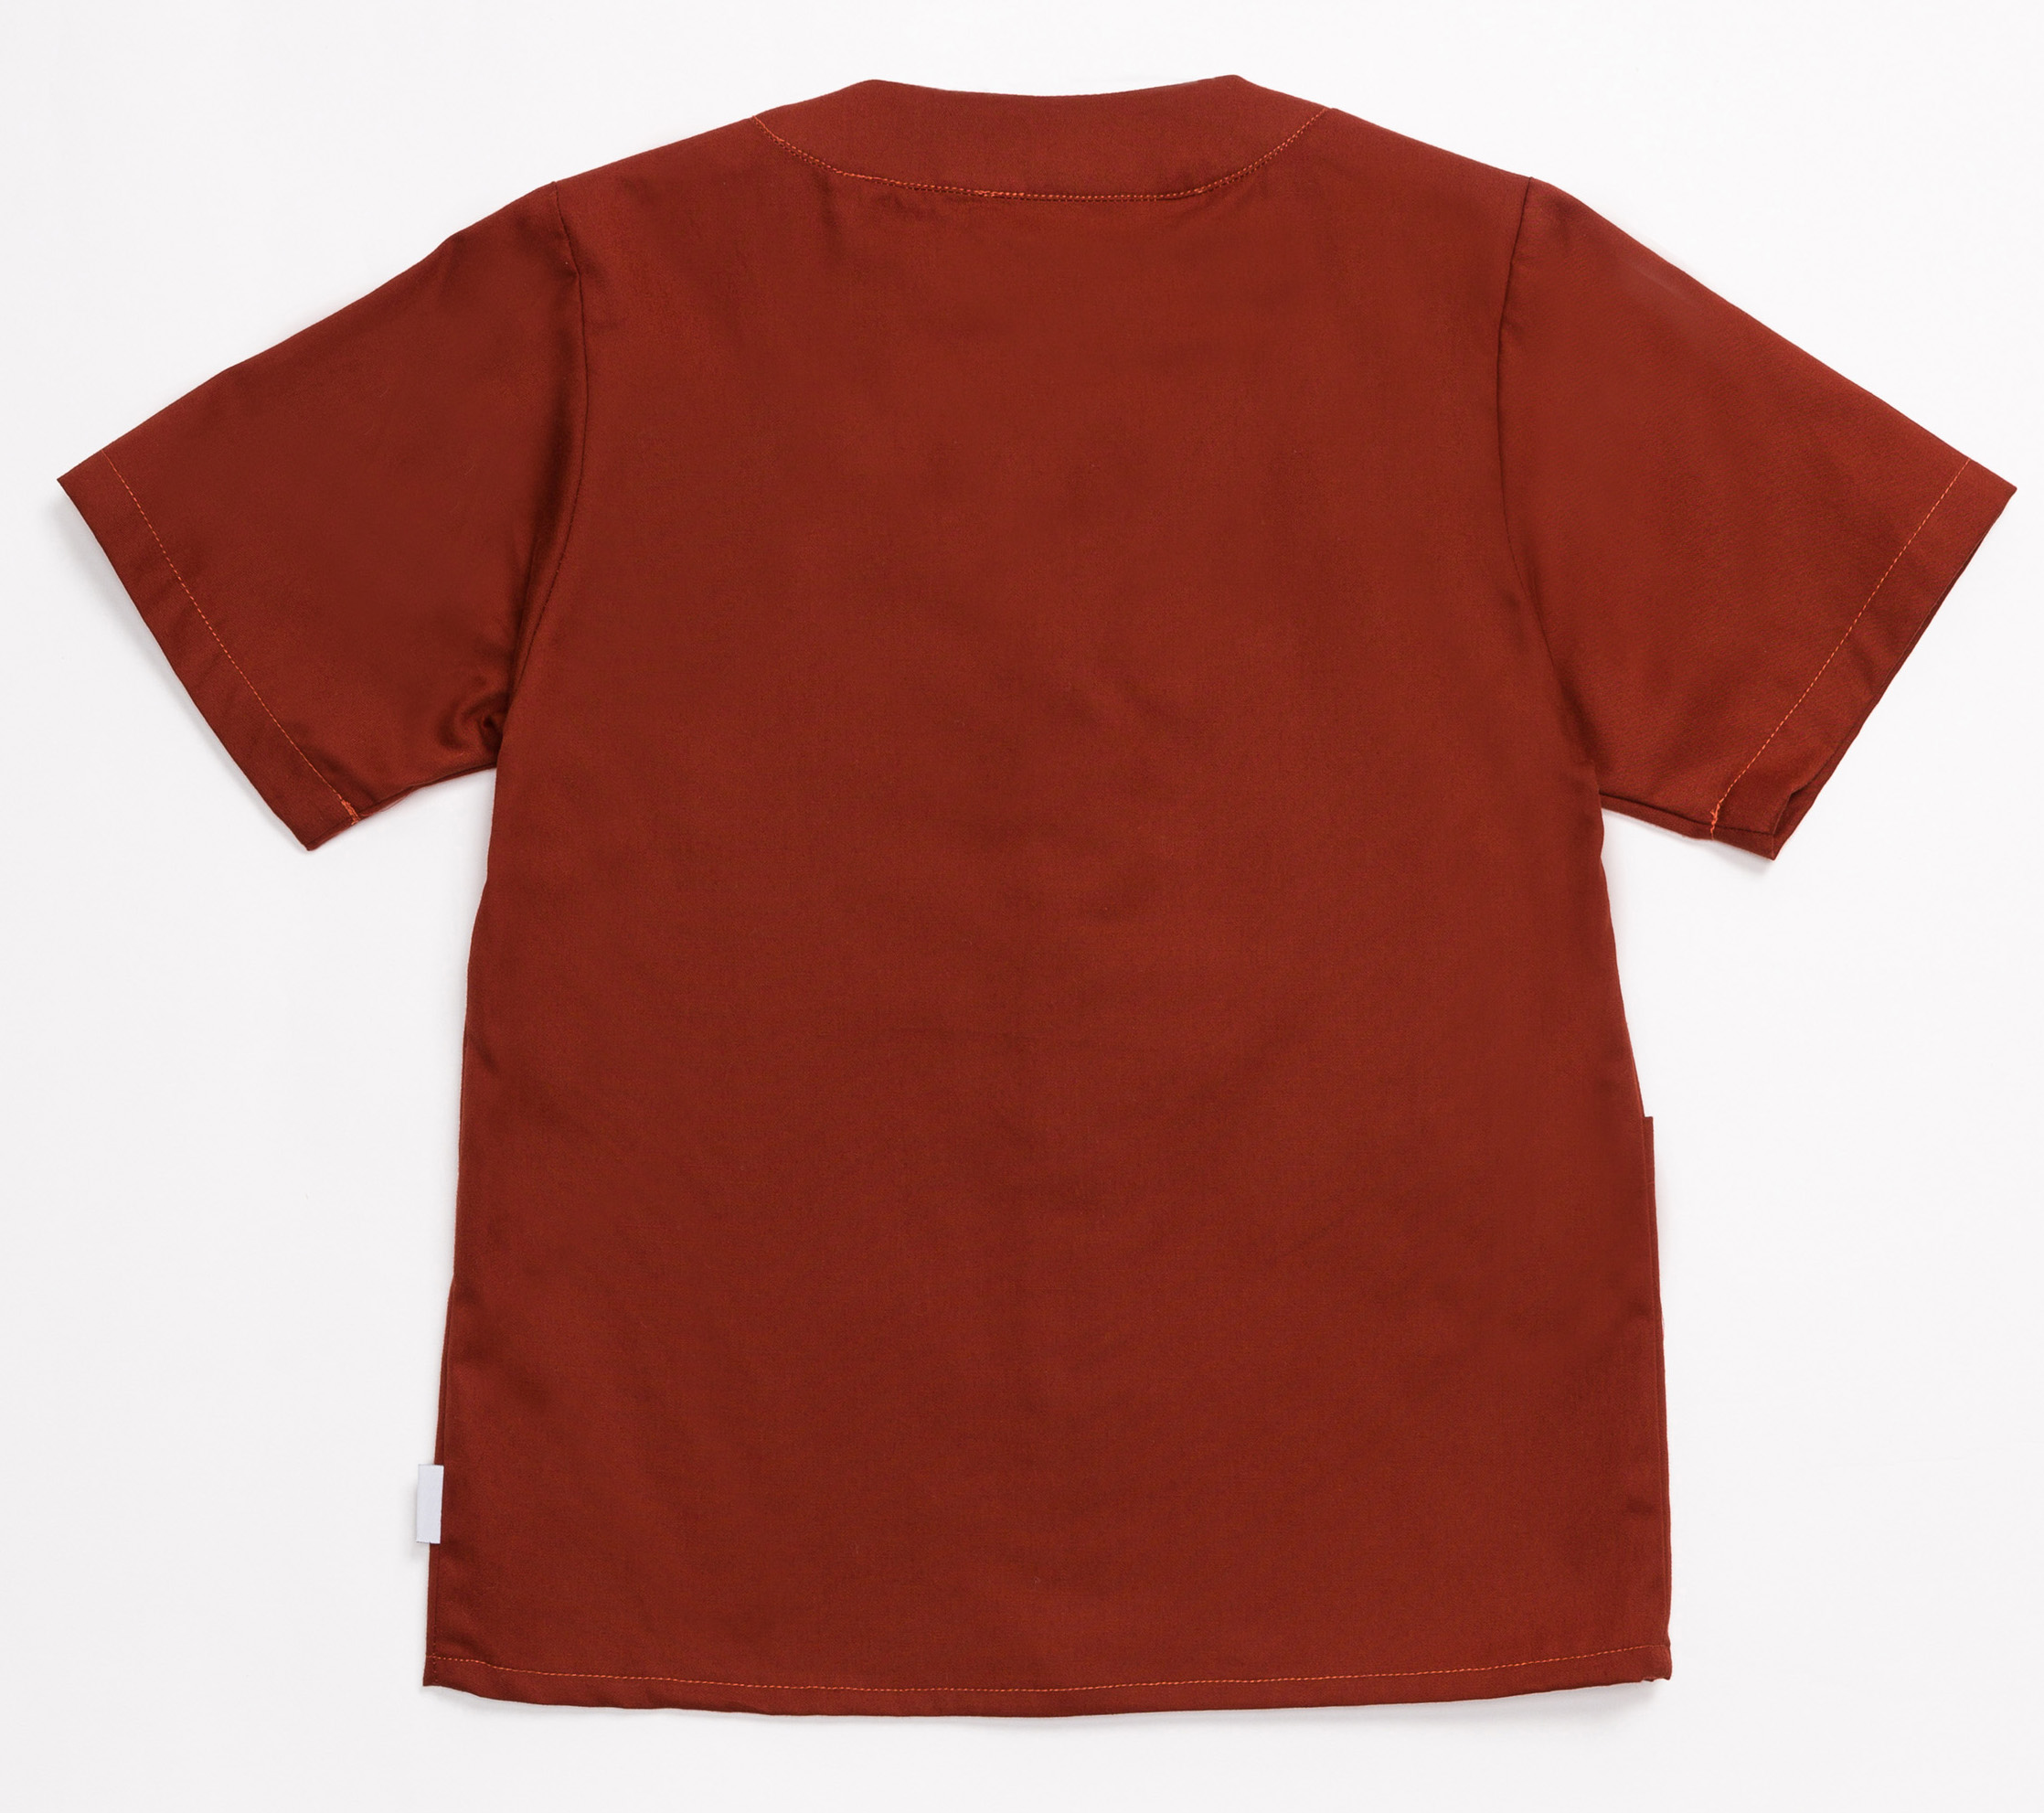                                                                                                                                              Roche Shirt-Maroon